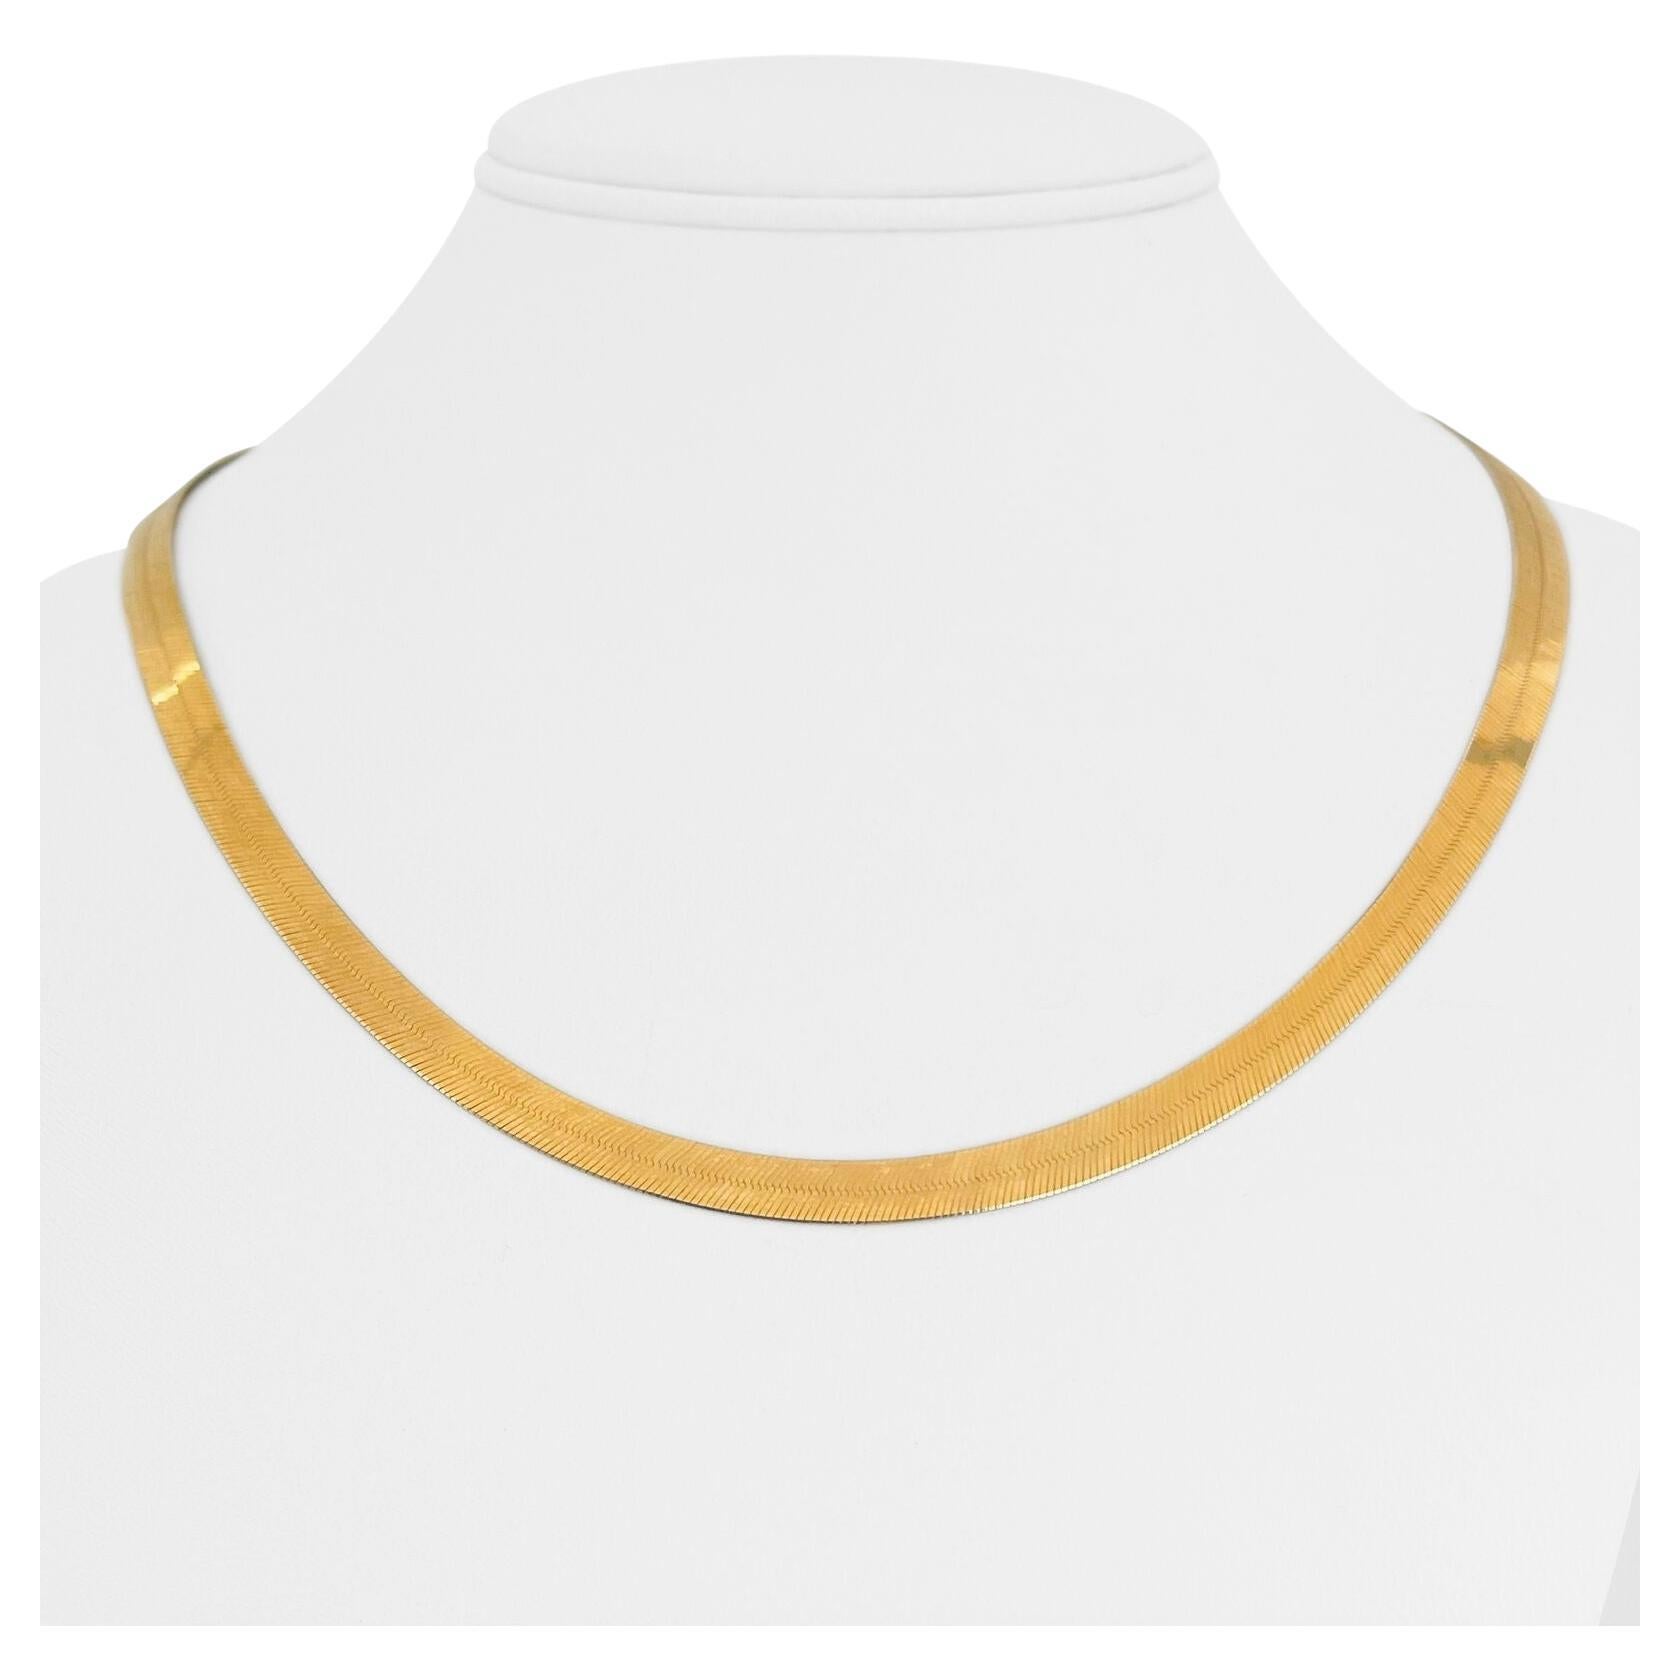 14 Karat Yellow Gold Solid Flat Herringbone Link Chain Necklace Italy 